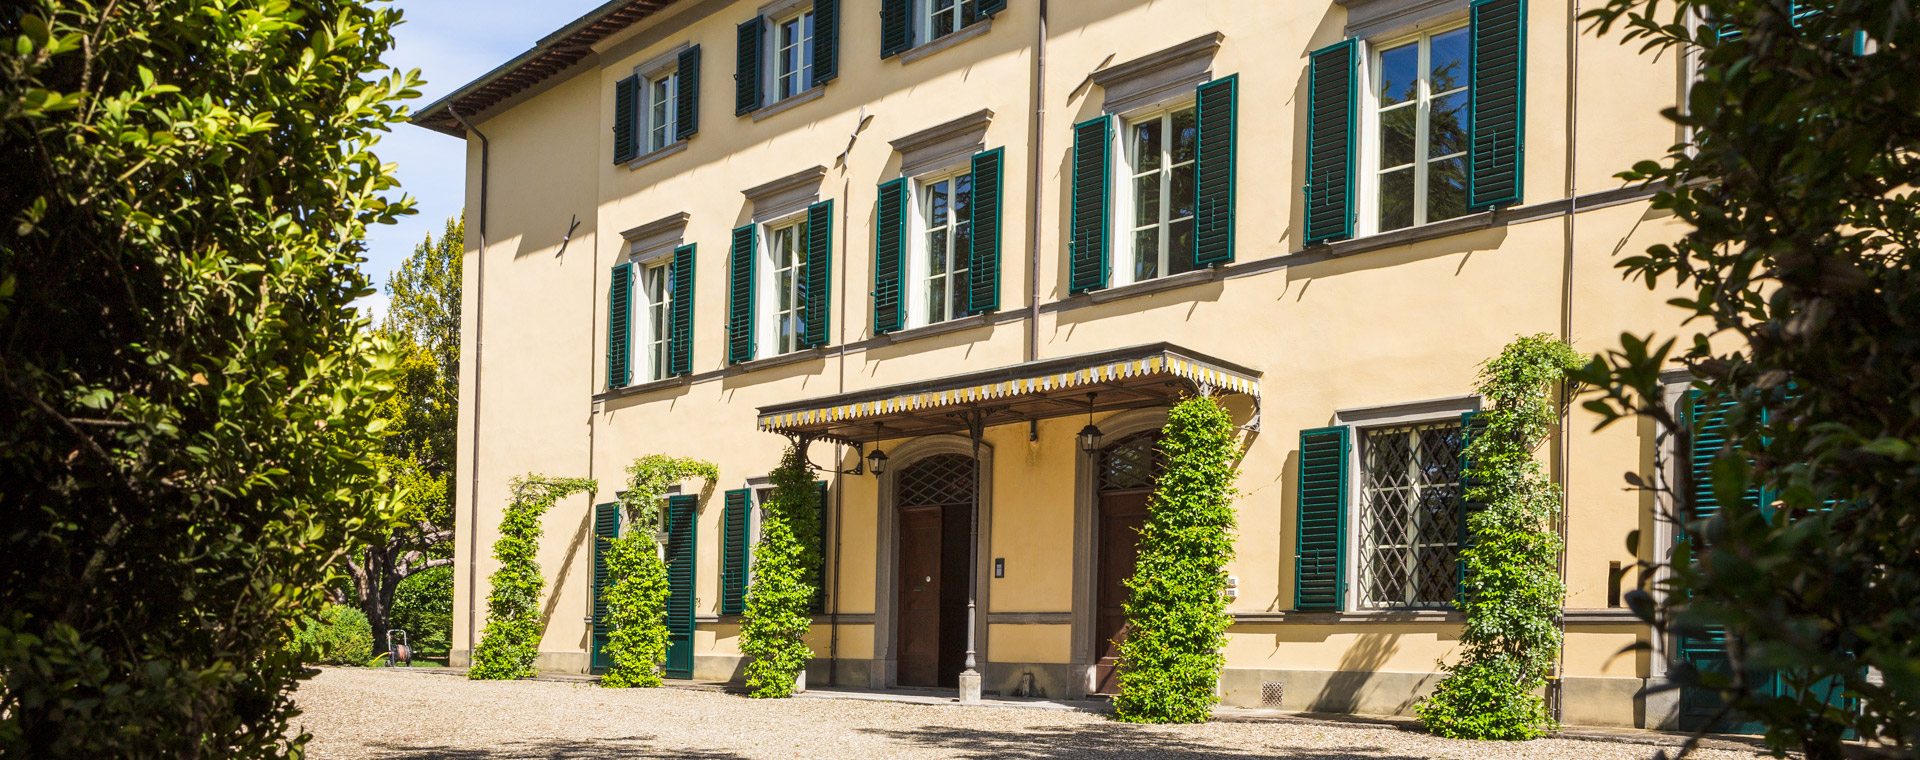 Luxury villa in Tuscany